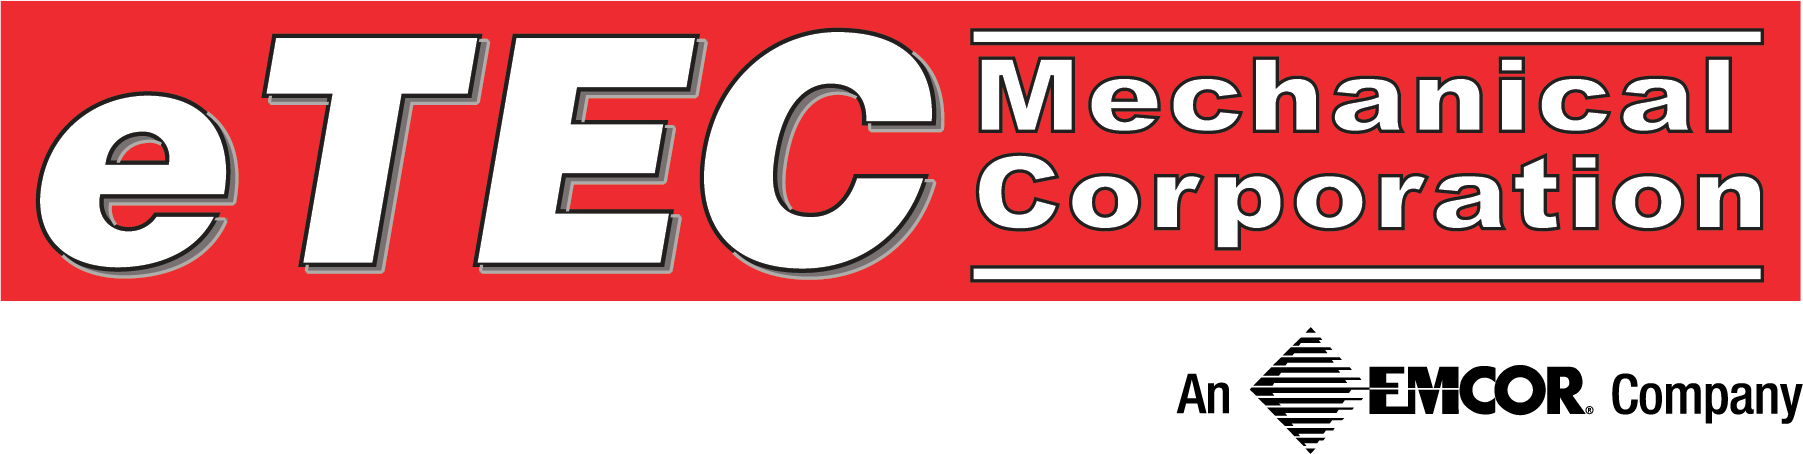 eTEC Mechanical Corporation logo